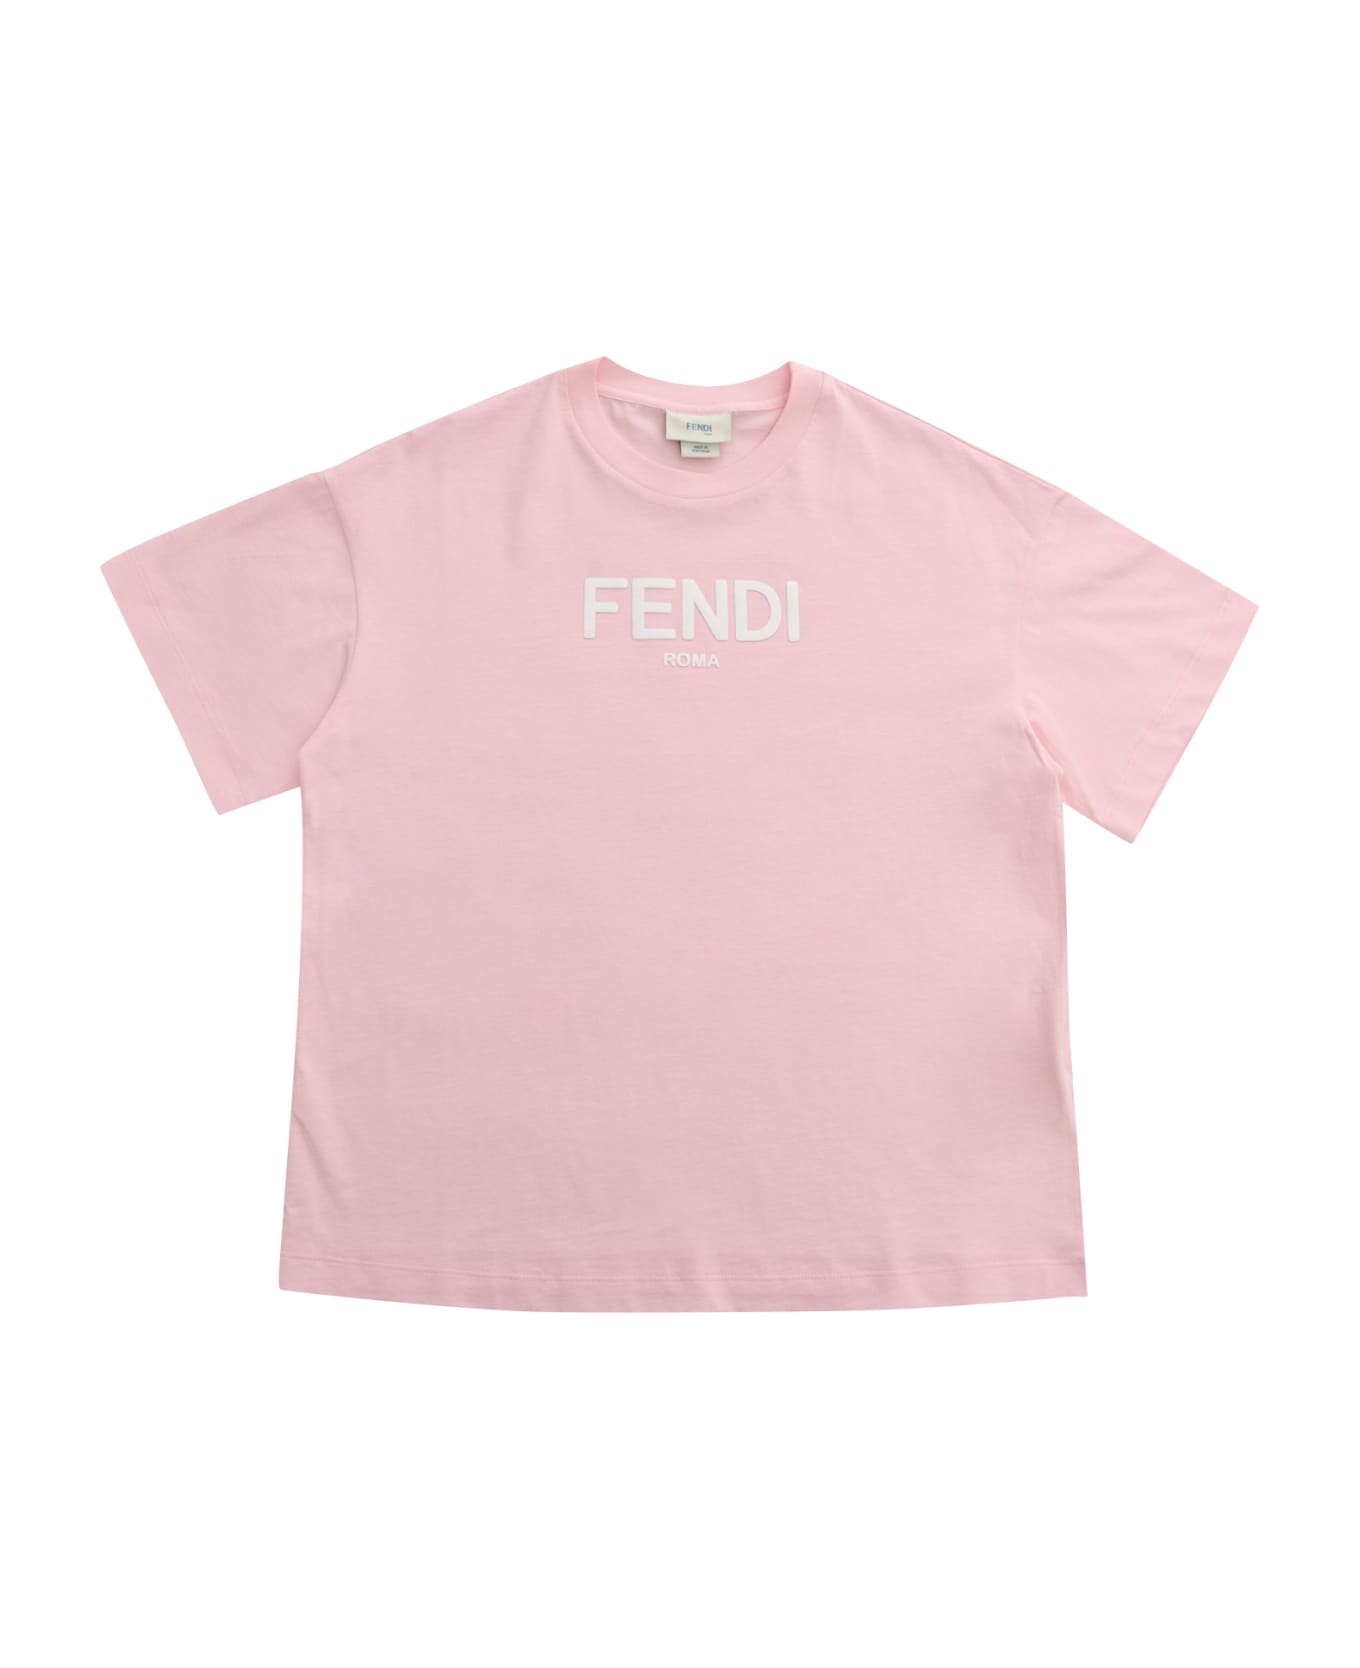 Fendi Pink Fendi T-shirt - PINK